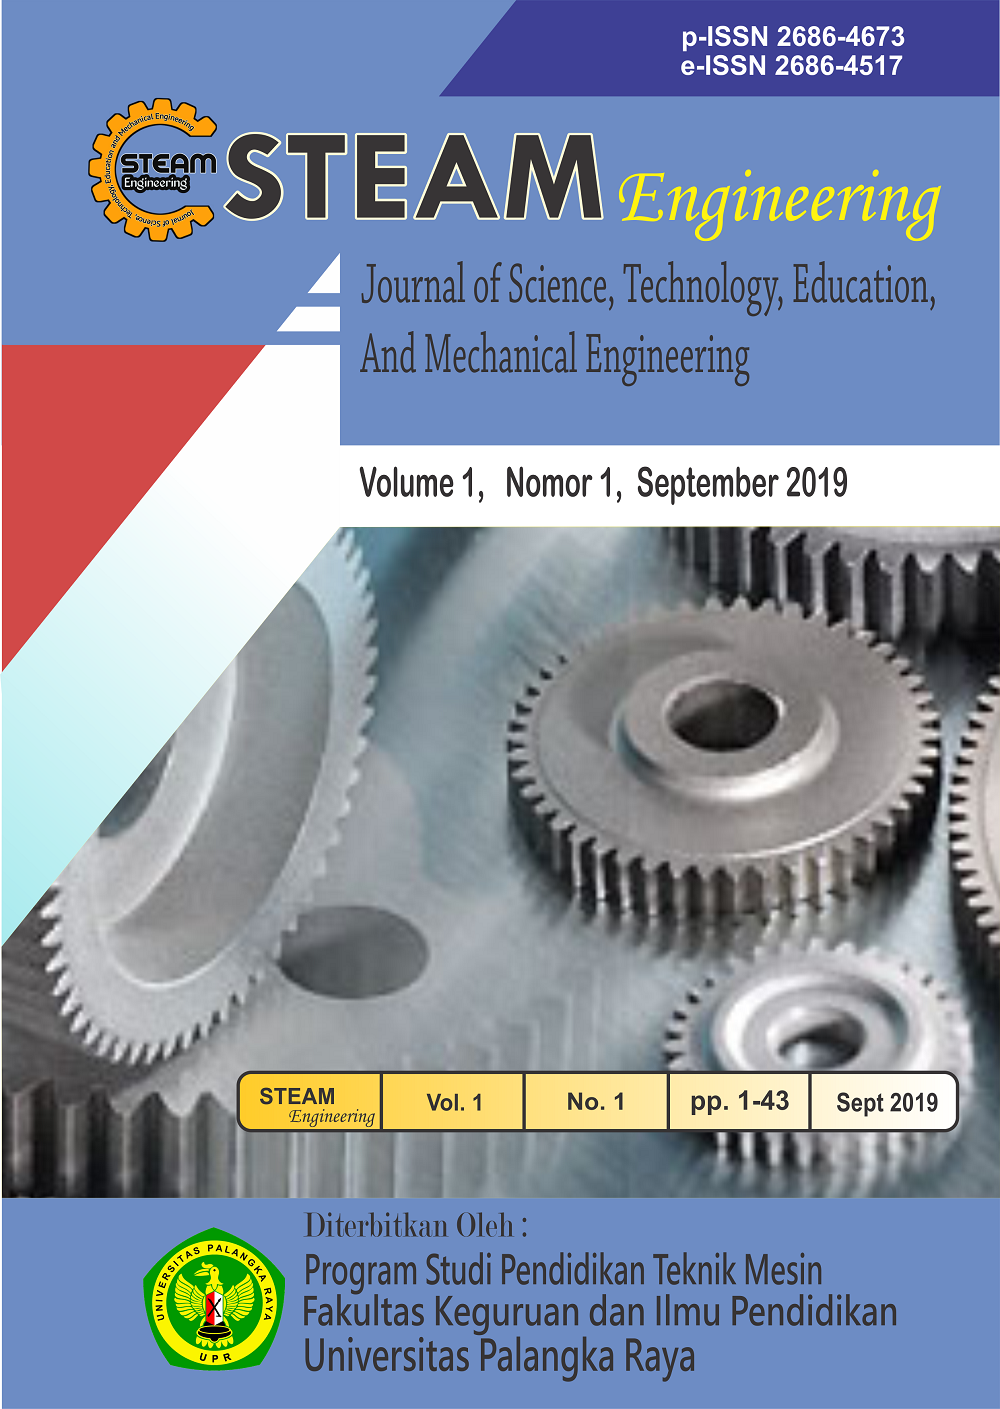 					View Vol. 1 No. 1 (2019): STEAM Engineering, Vol. 1, No. 1, September 2019
				